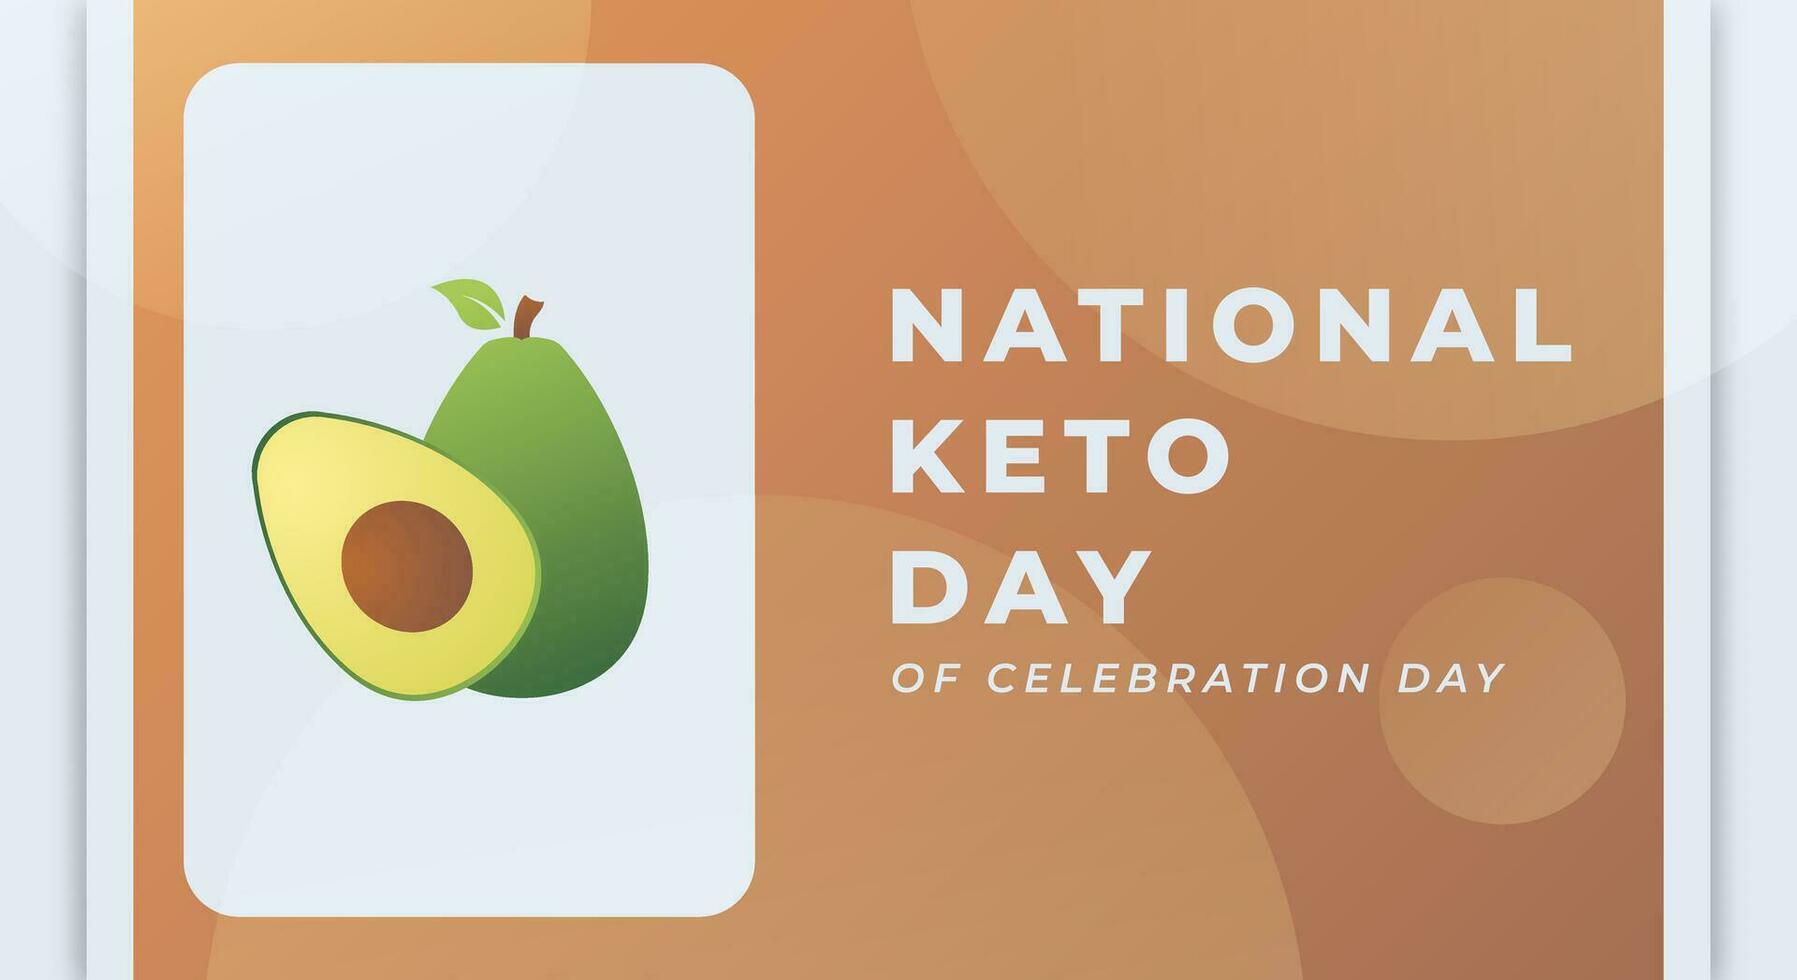 National Keto Day Celebration Vector Design Illustration for Background, Poster, Banner, Advertising, Greeting Card